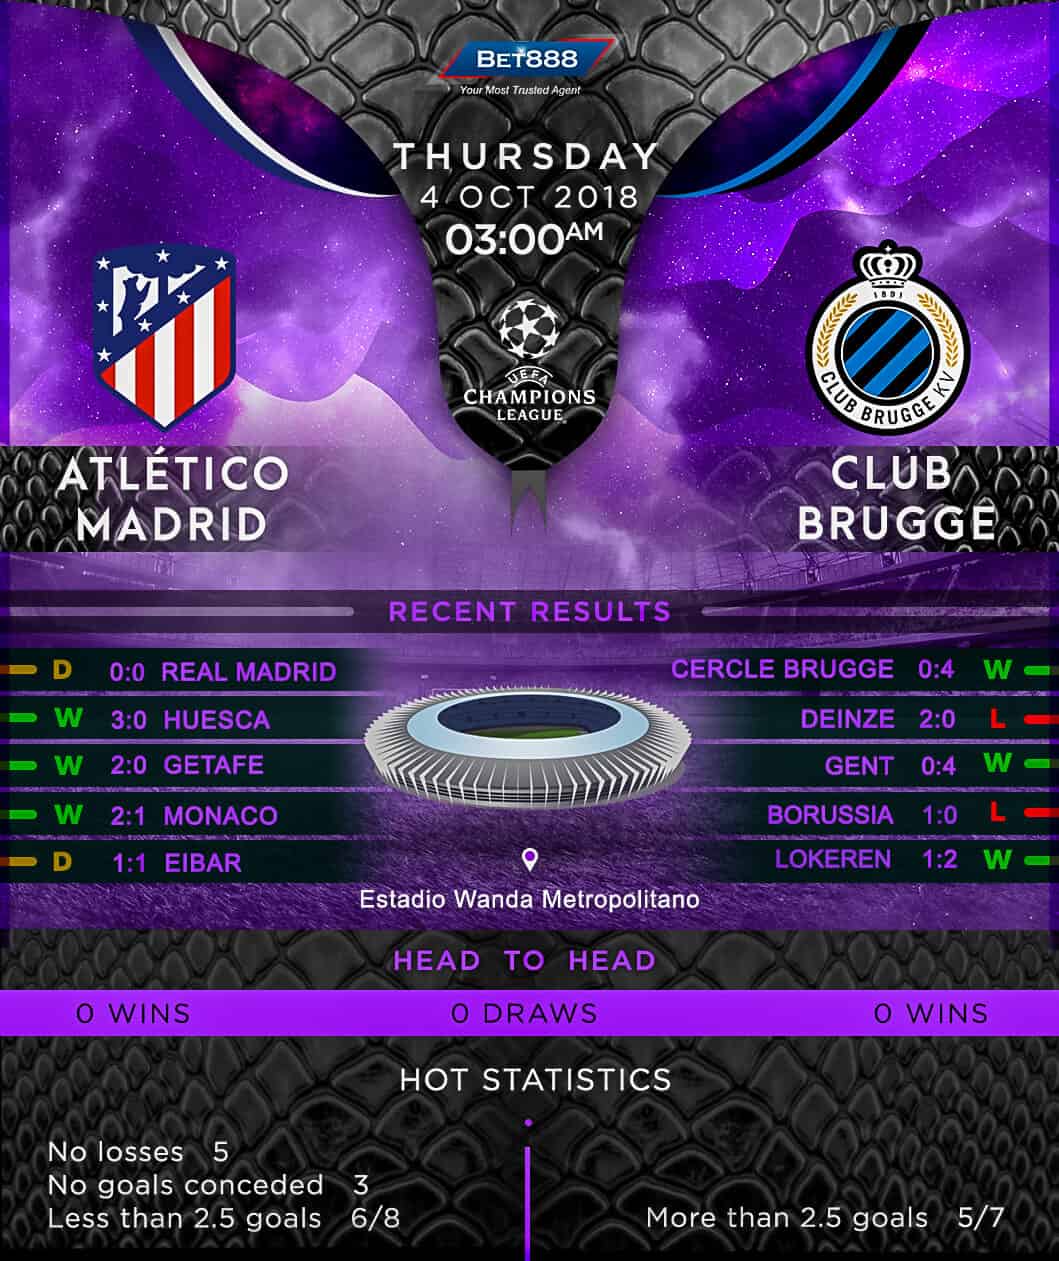 Atletico Madrid vs Club Brugge 04/10/18